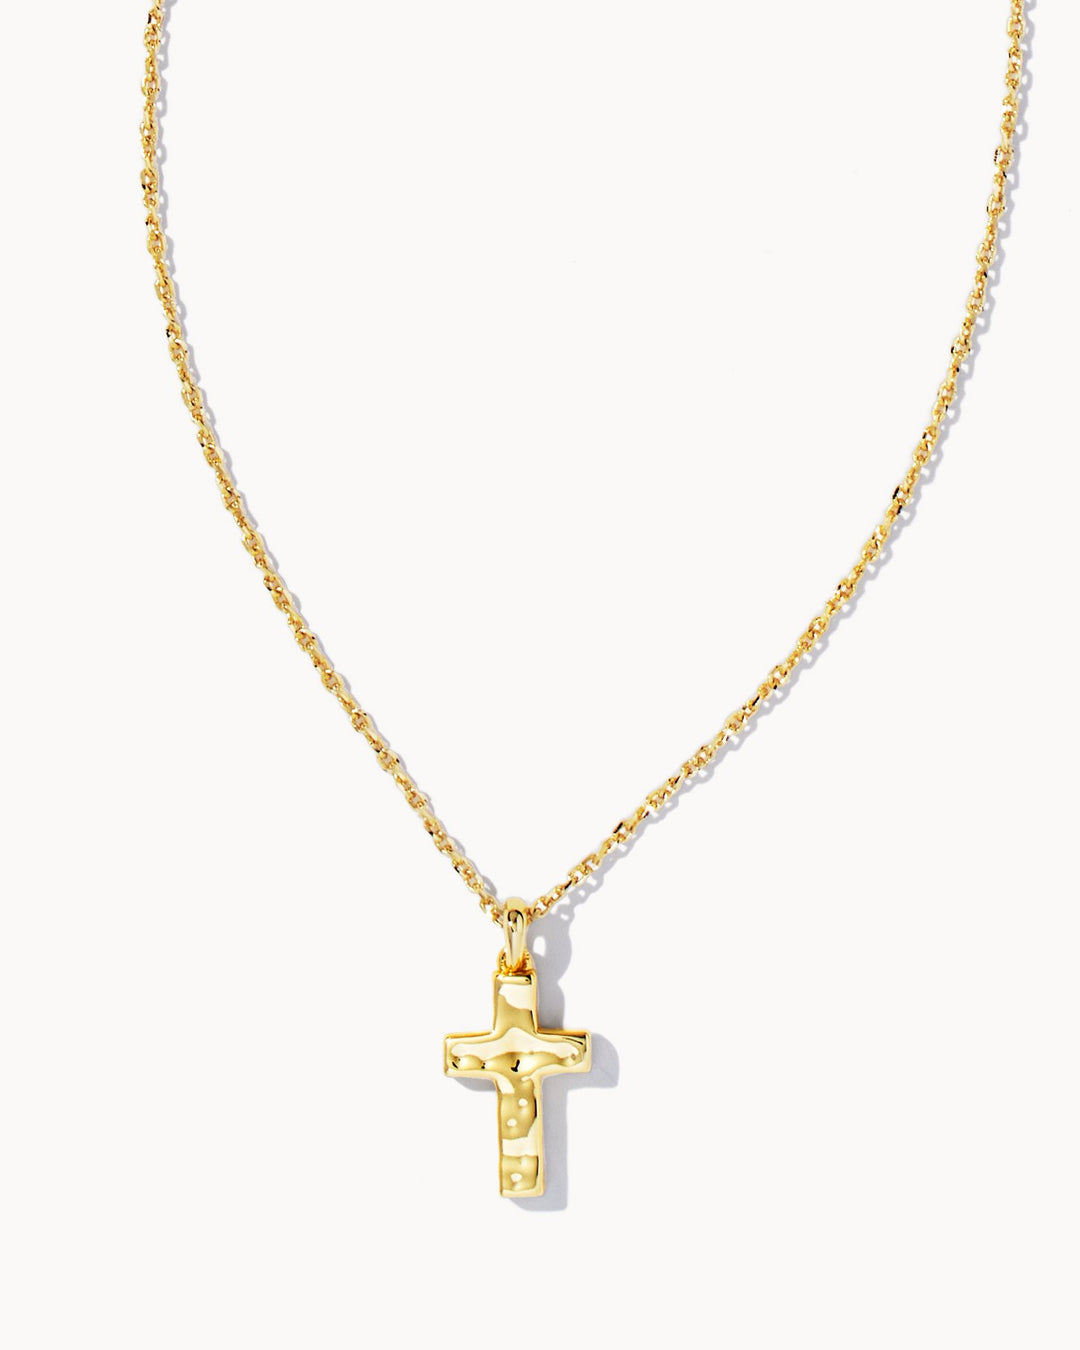 Kendra Scott Cross Pendant Necklace in Gold